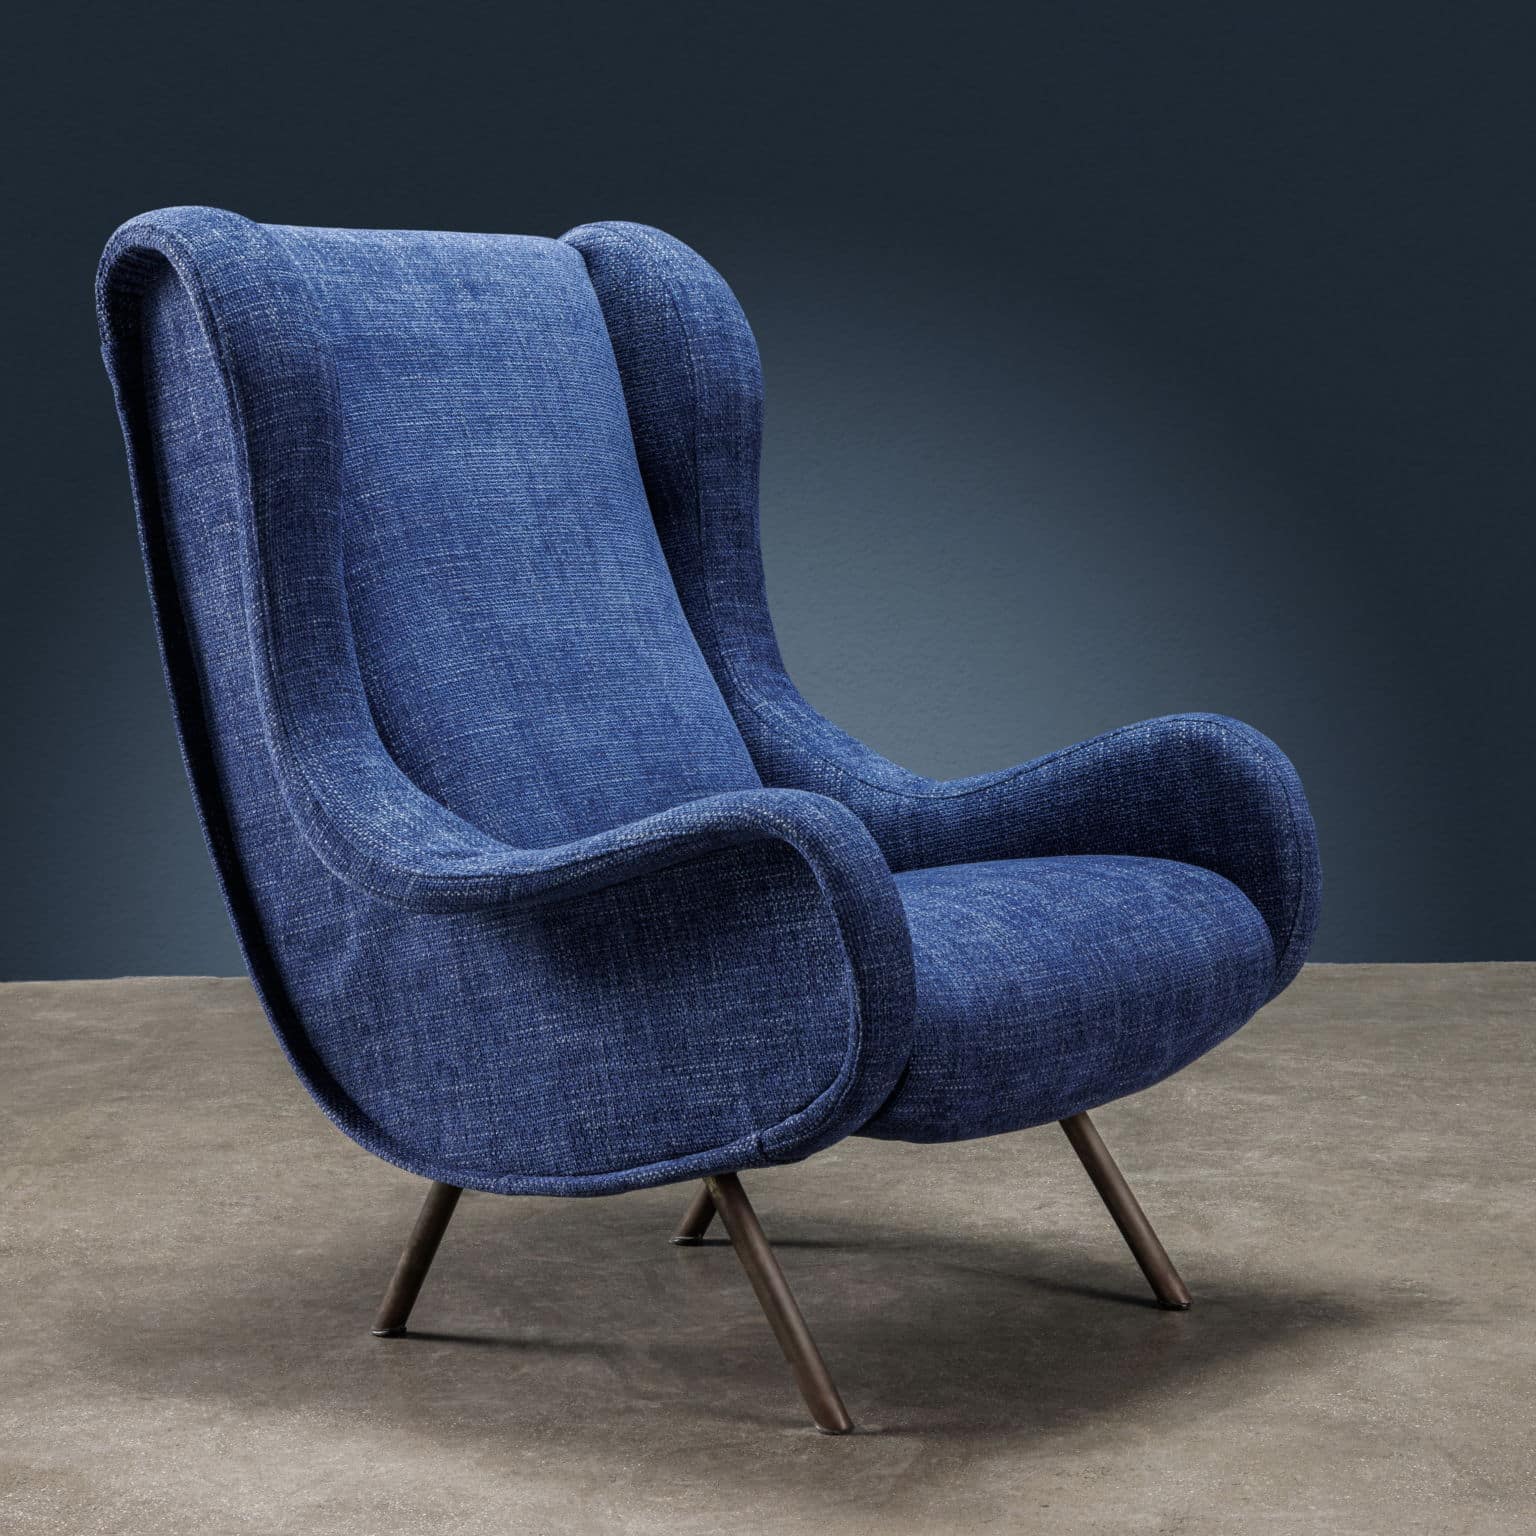 Marco Zanuso ‘Senior’ model armchair for Arflex (blue)